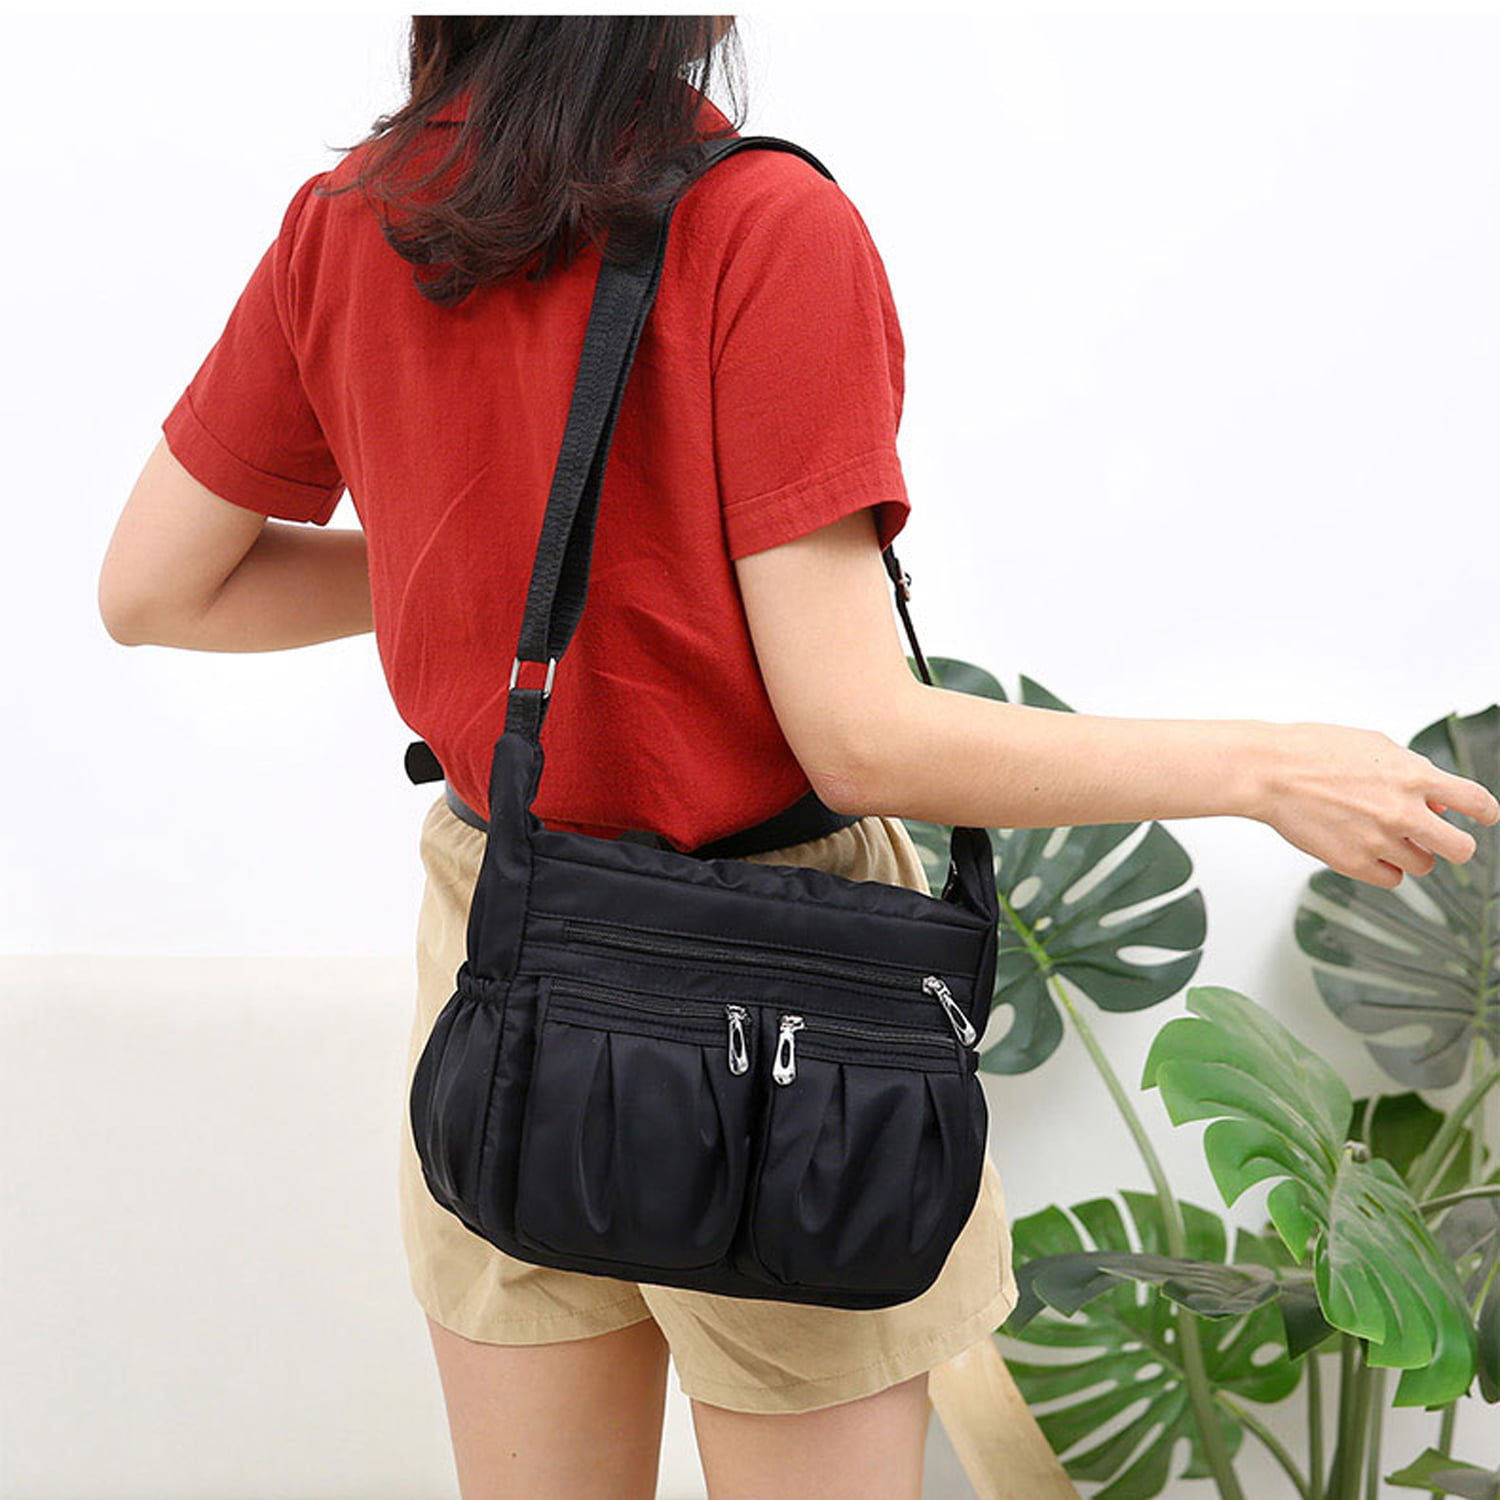 rgdsysa Small Nylon Crossbody Bags for Women, Messenger Bag Travel Purses  and Waterproof Shoulder Handbags Pocketbooks